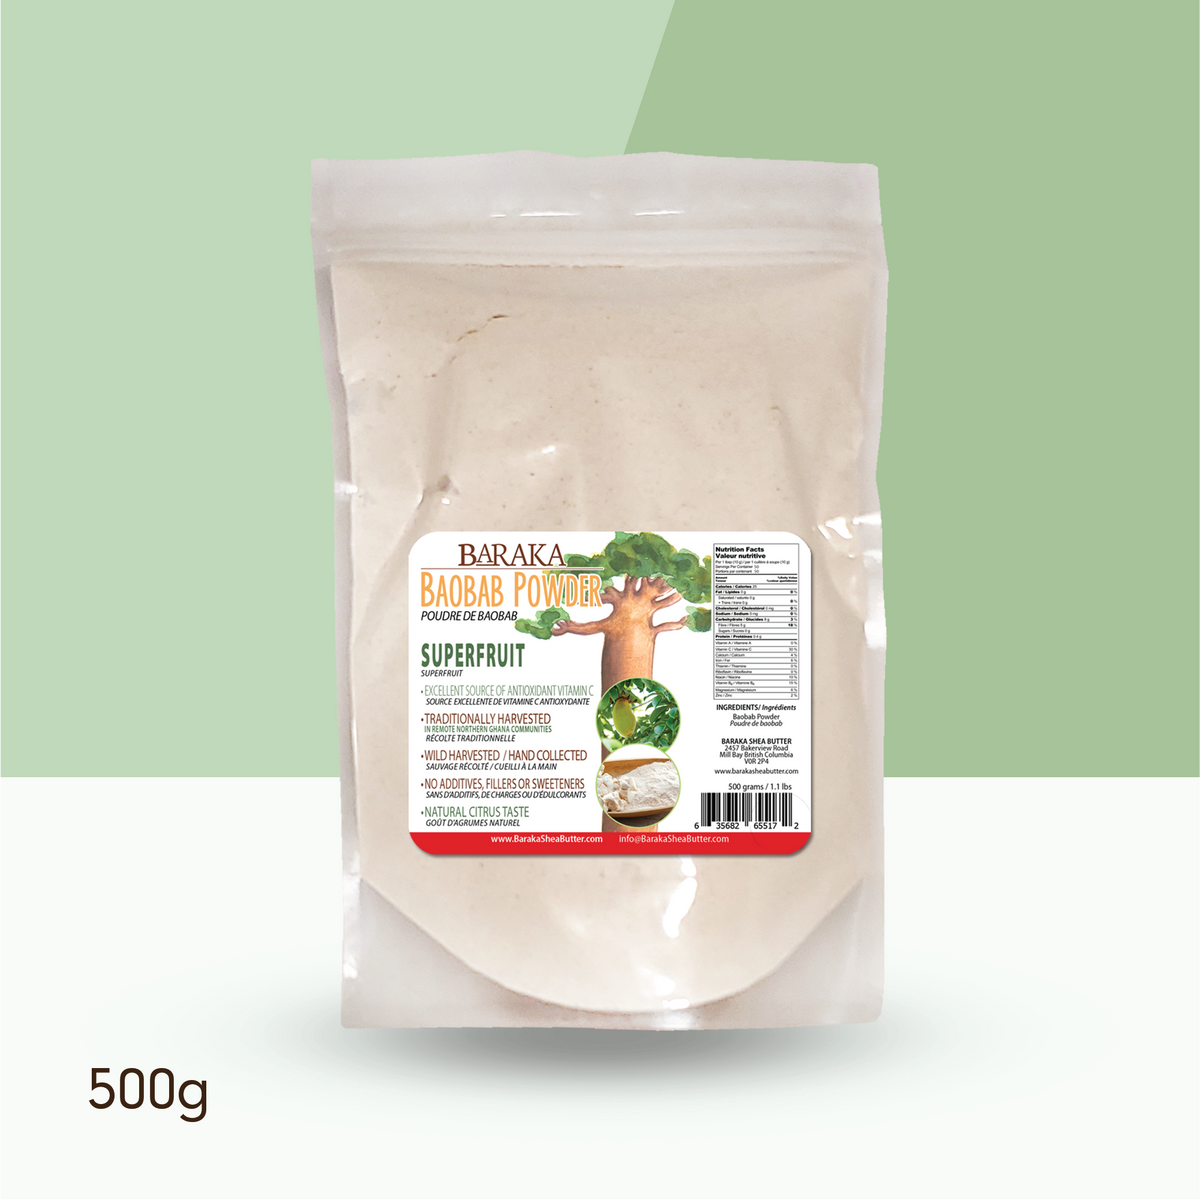 Baraka Baobab Powder